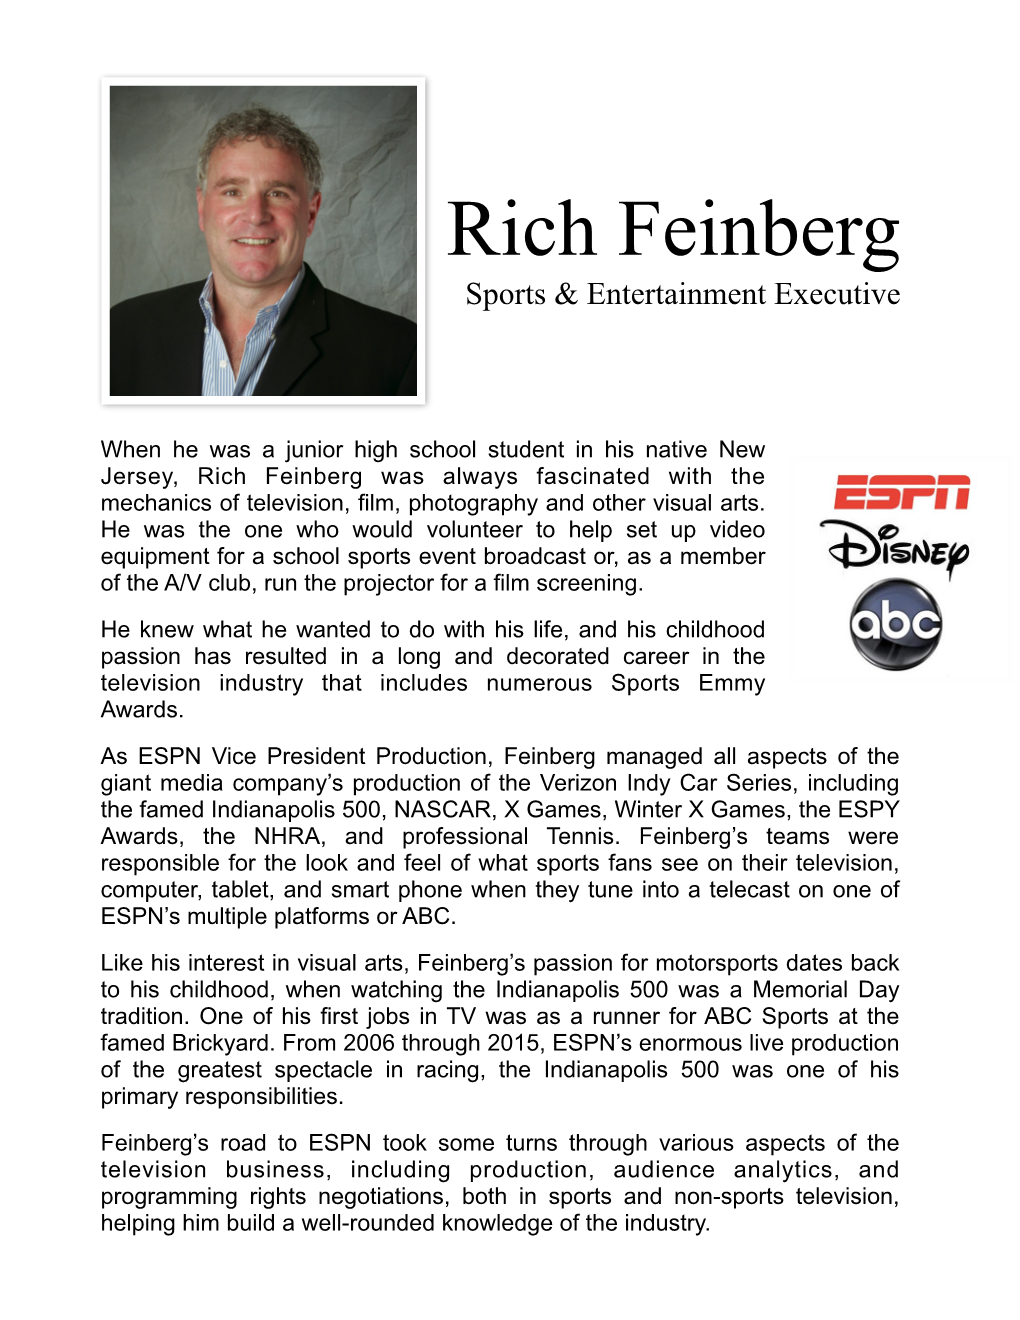 Rich Feinberg Bio 2016